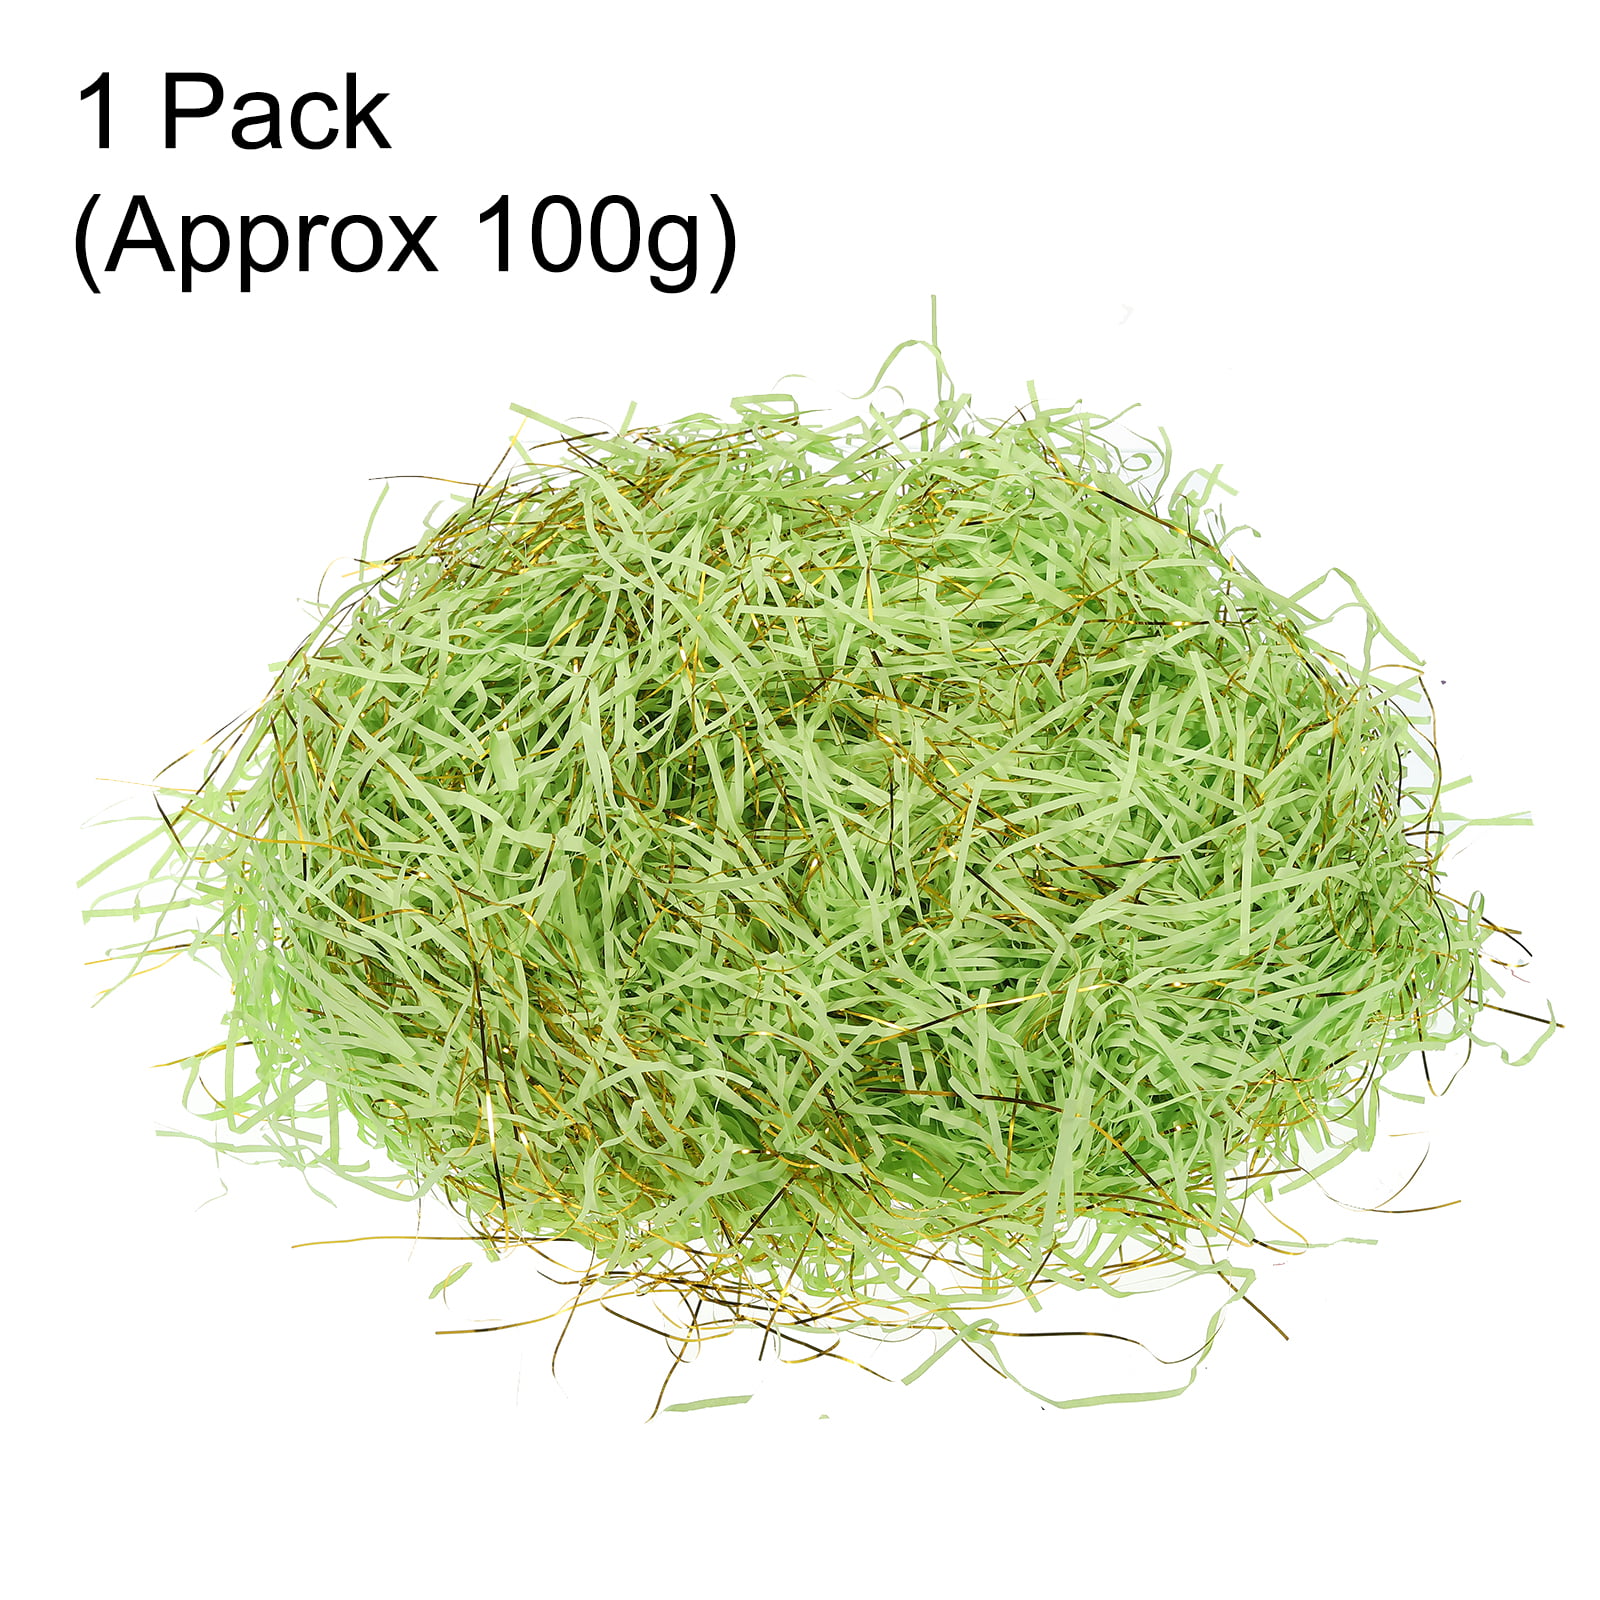 Basket Grass Craft Shredded Paper Light Green,Gold Tone (1Pack Approx 100g)  